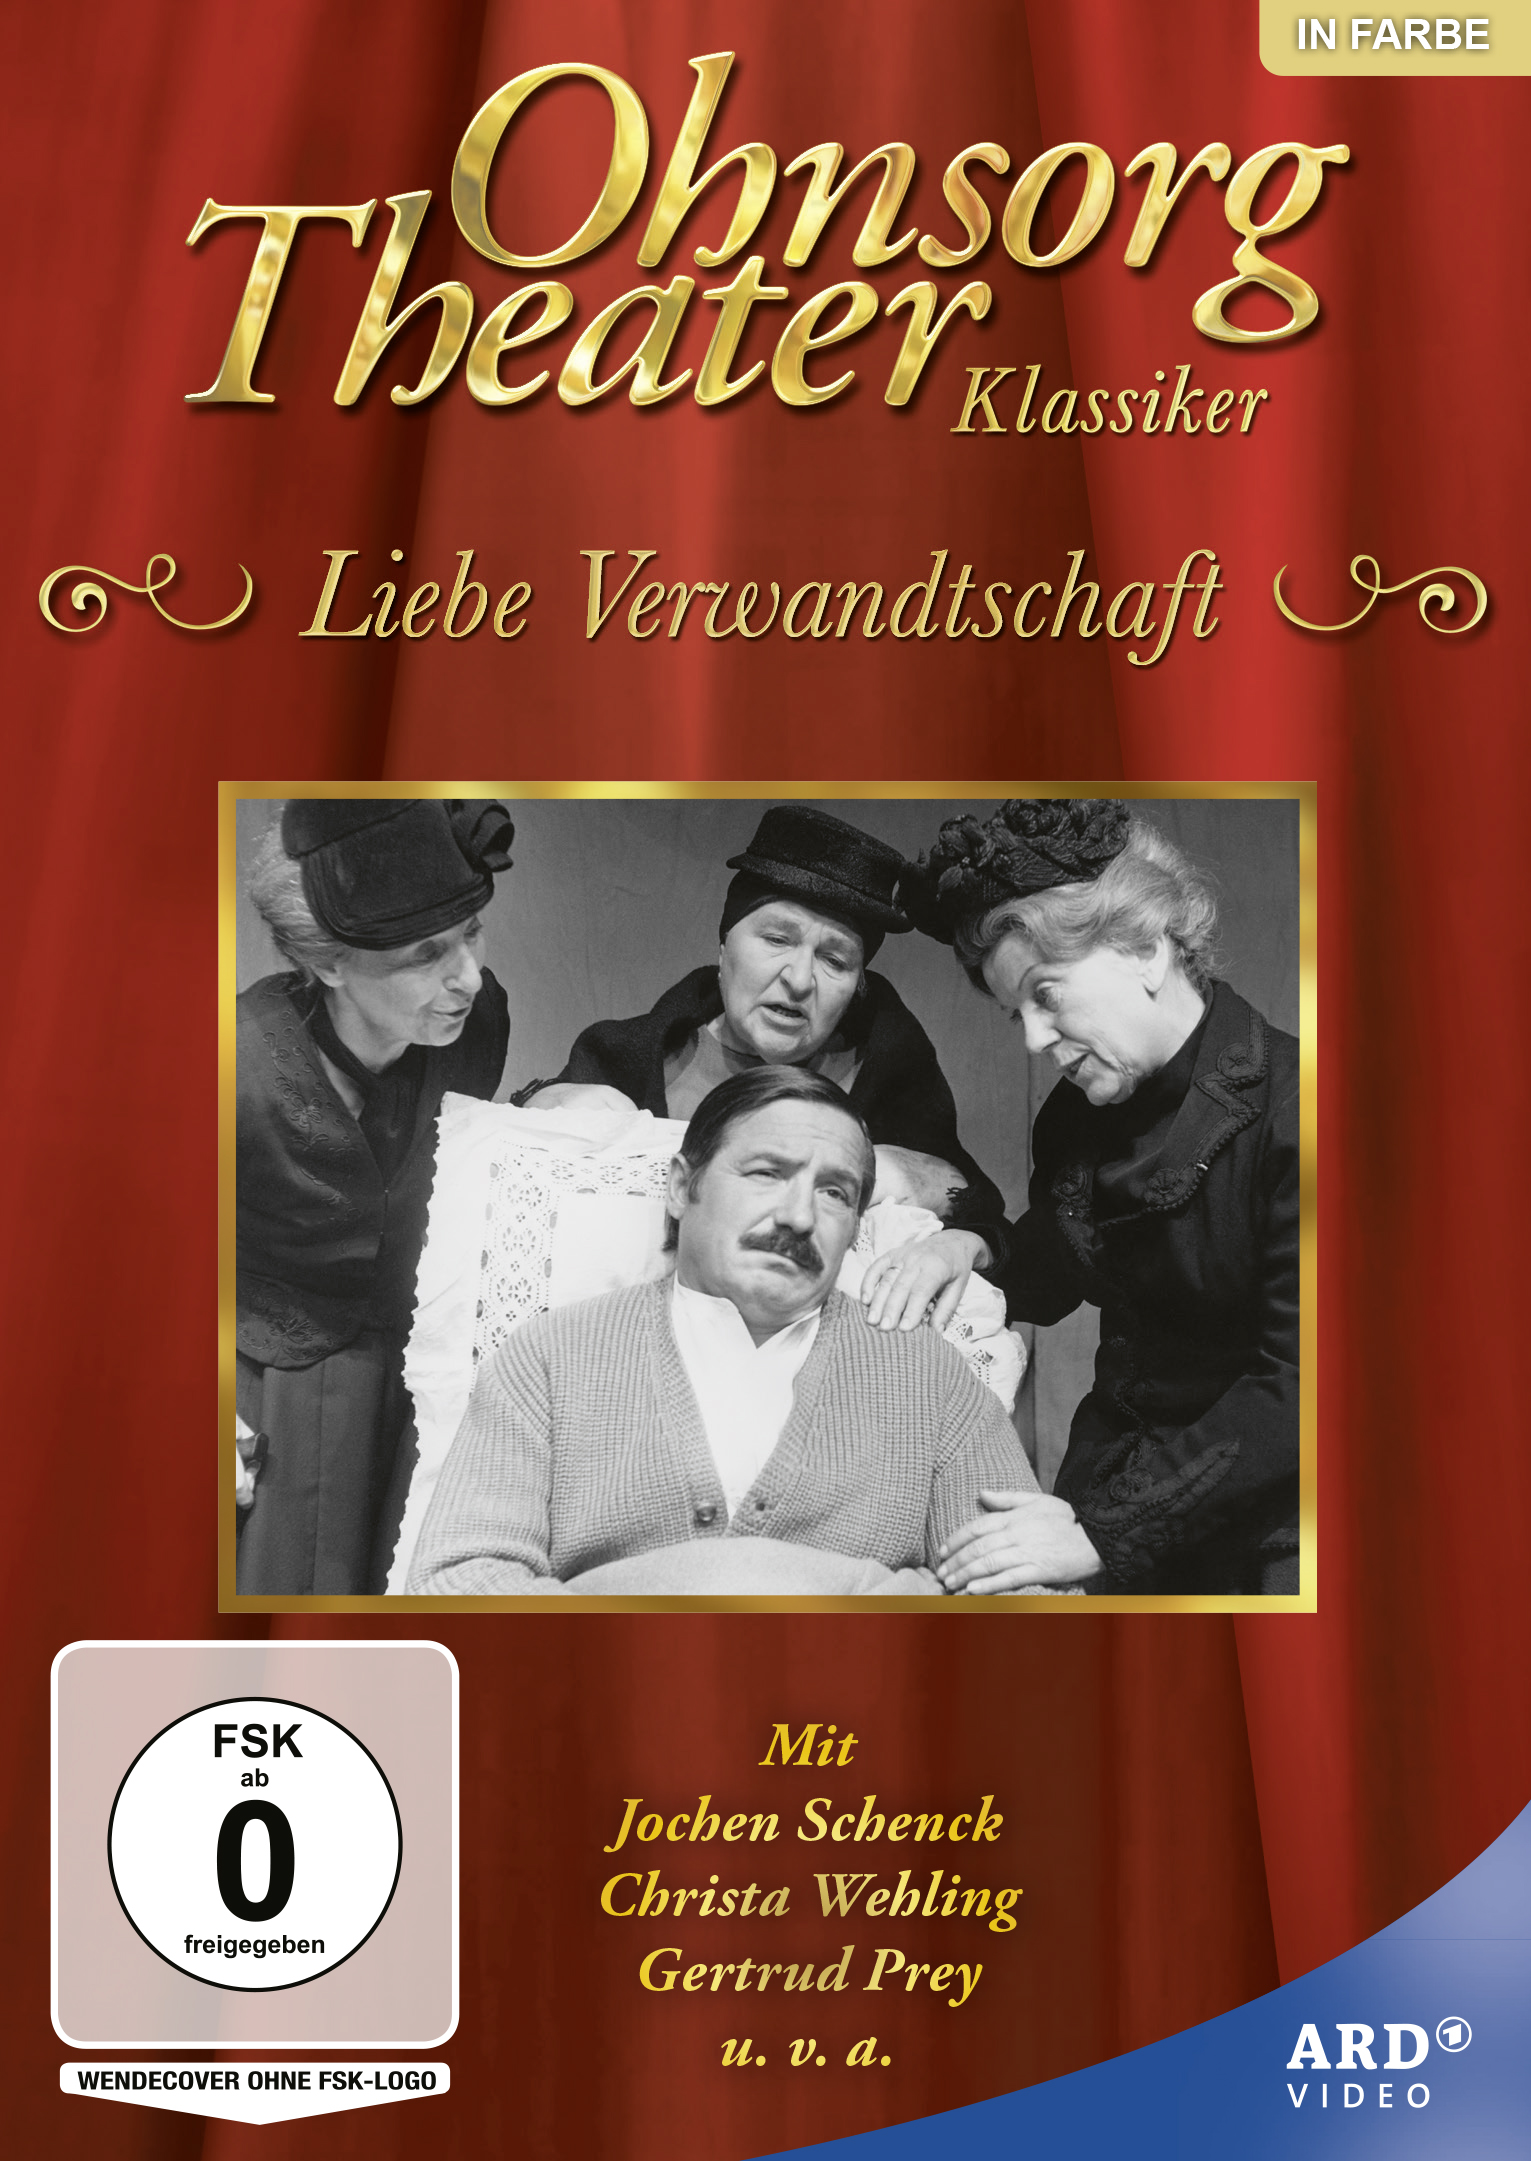 Verwandtschaft Ohnsorg-Theater DVD Klassiker: Liebe